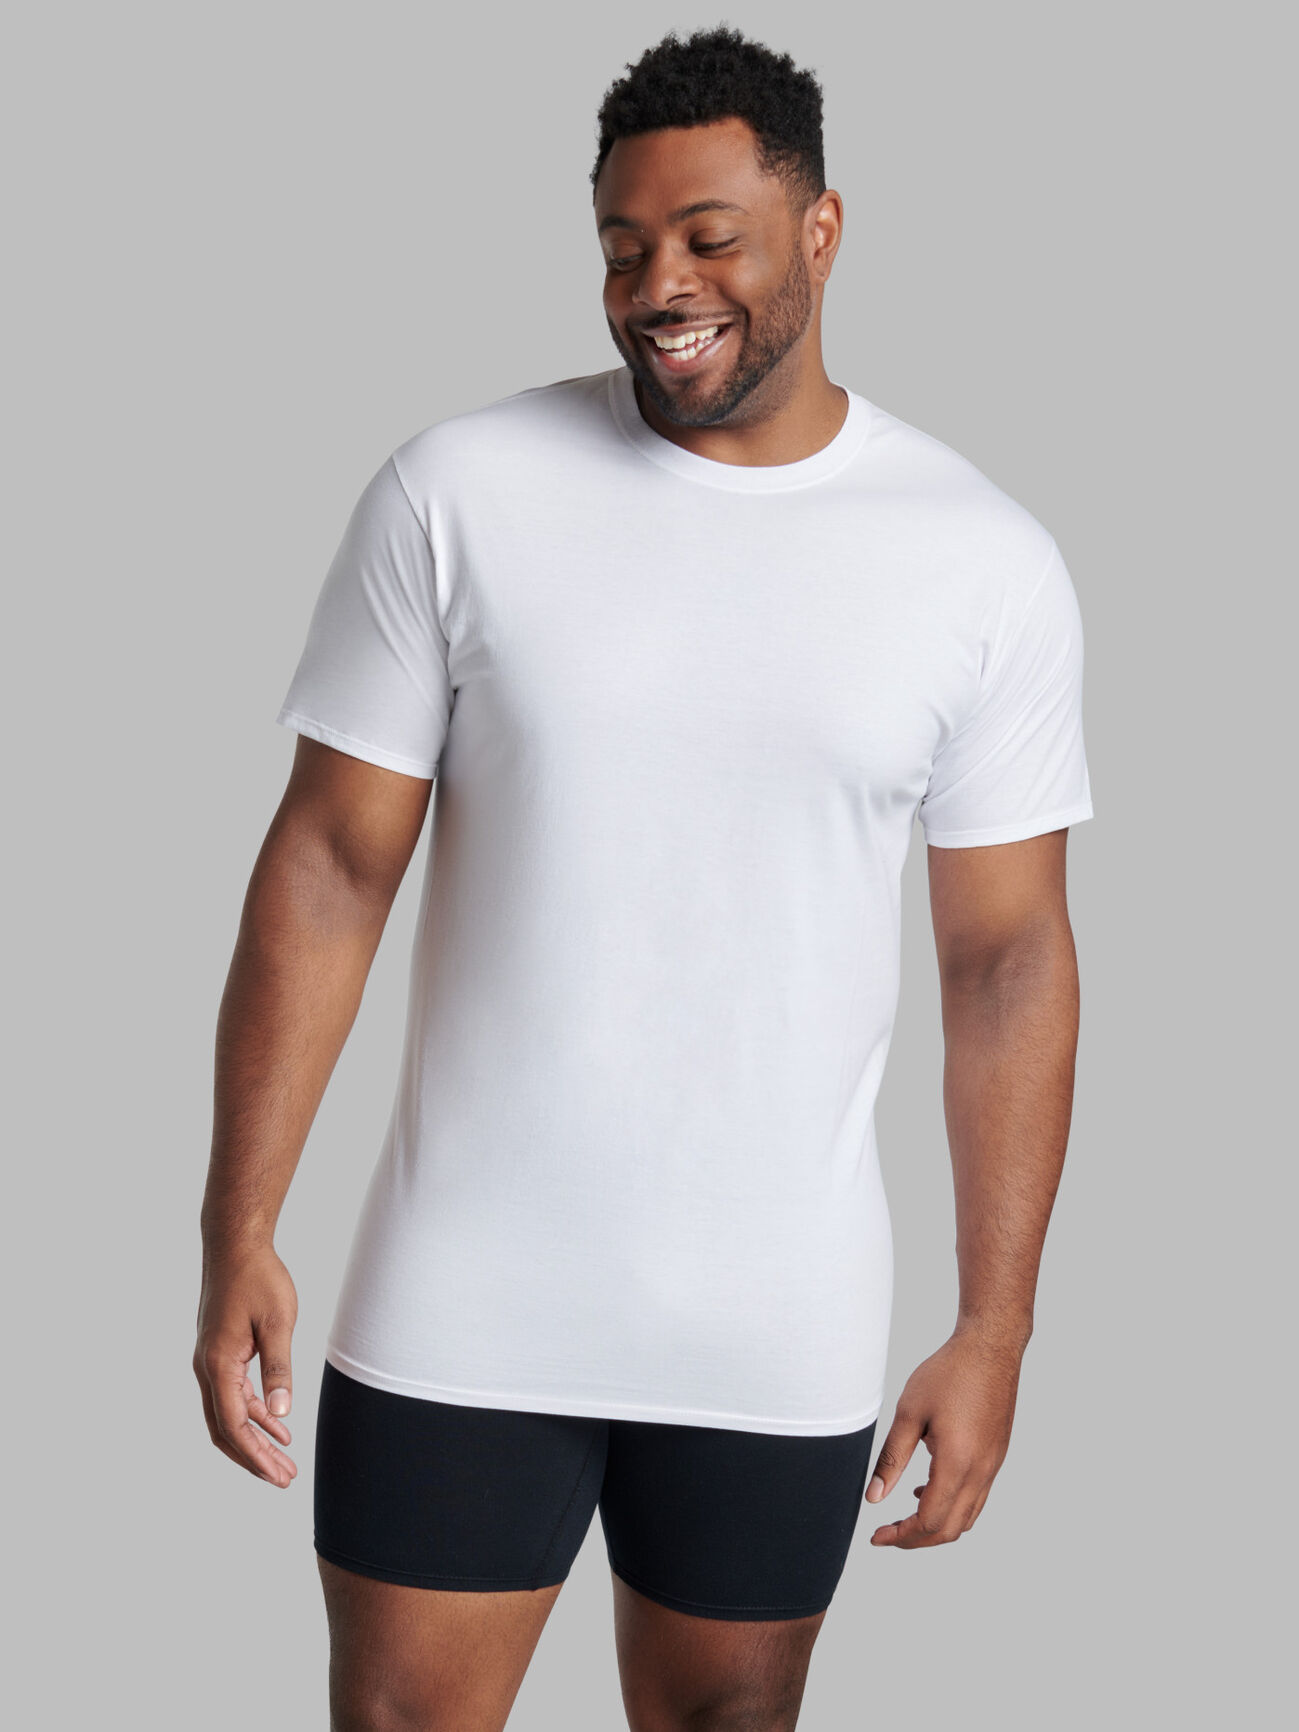 Hanes 4-Pack Men's Big & Tall 100% Cotton V-Neck T-Shirts White